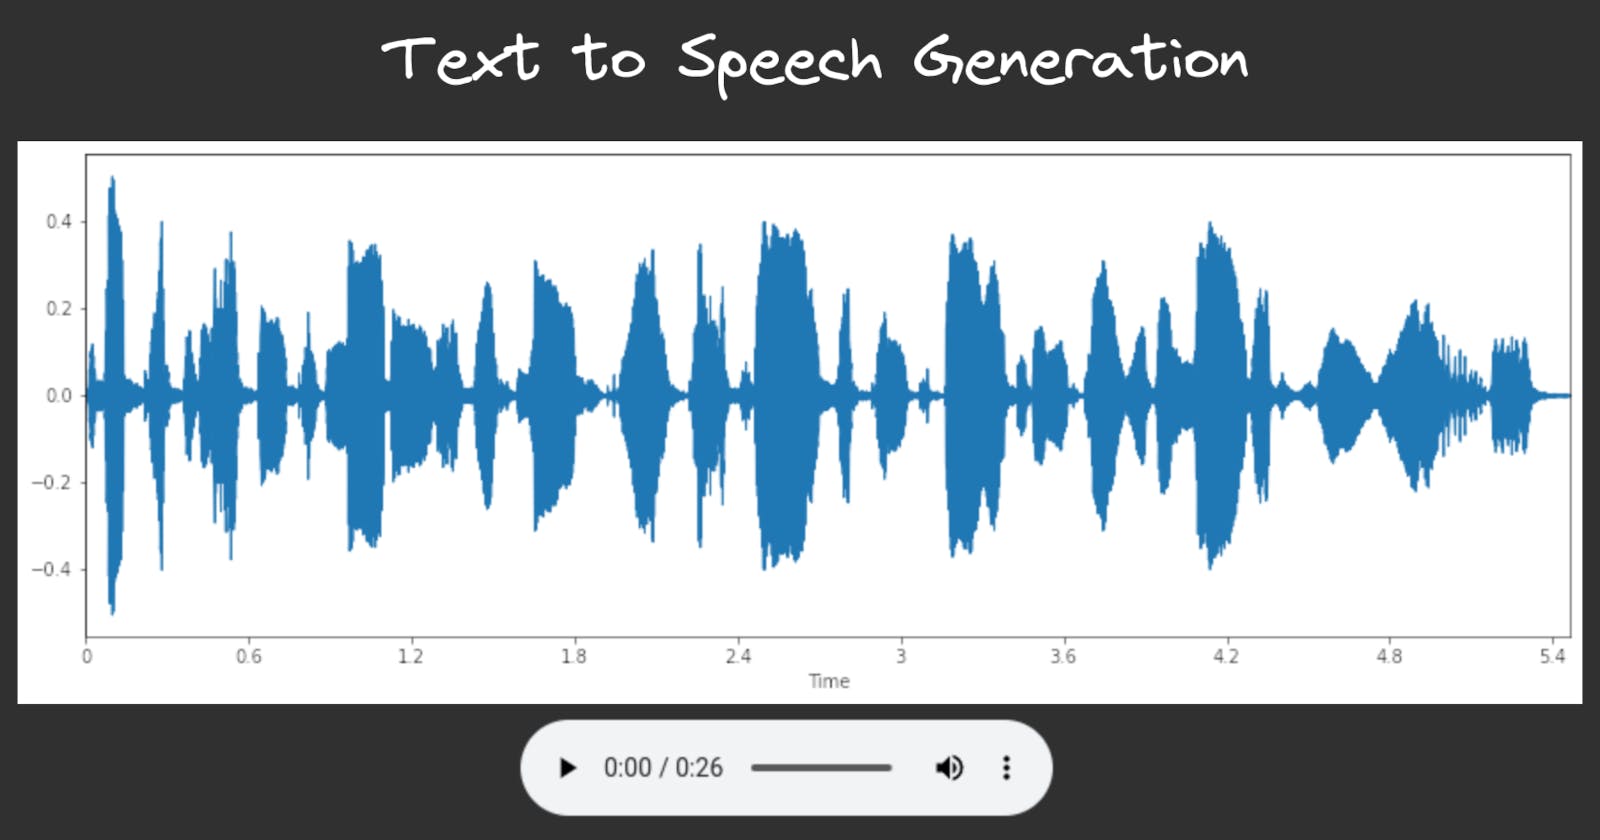 Text to speech generation